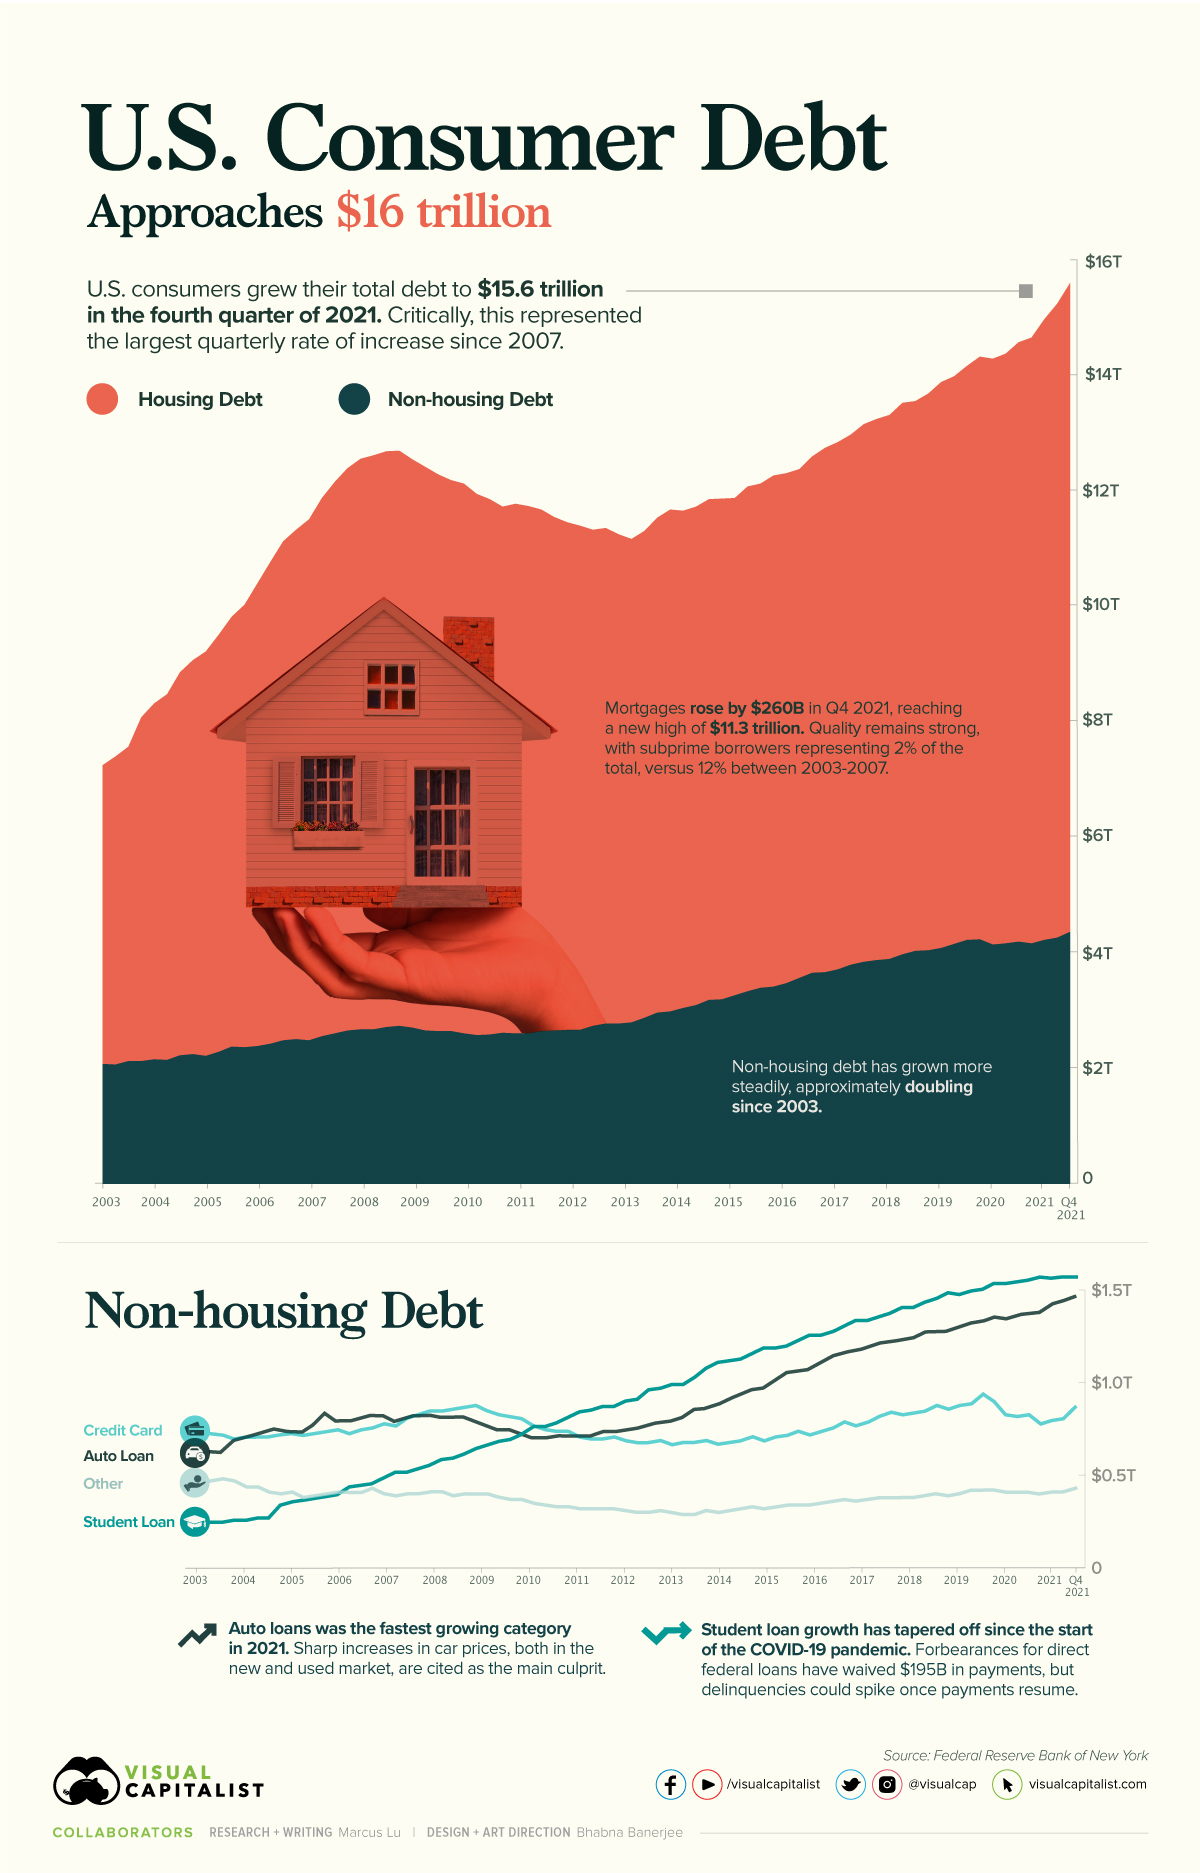 U.S. consumer debt approaches $16 trillion